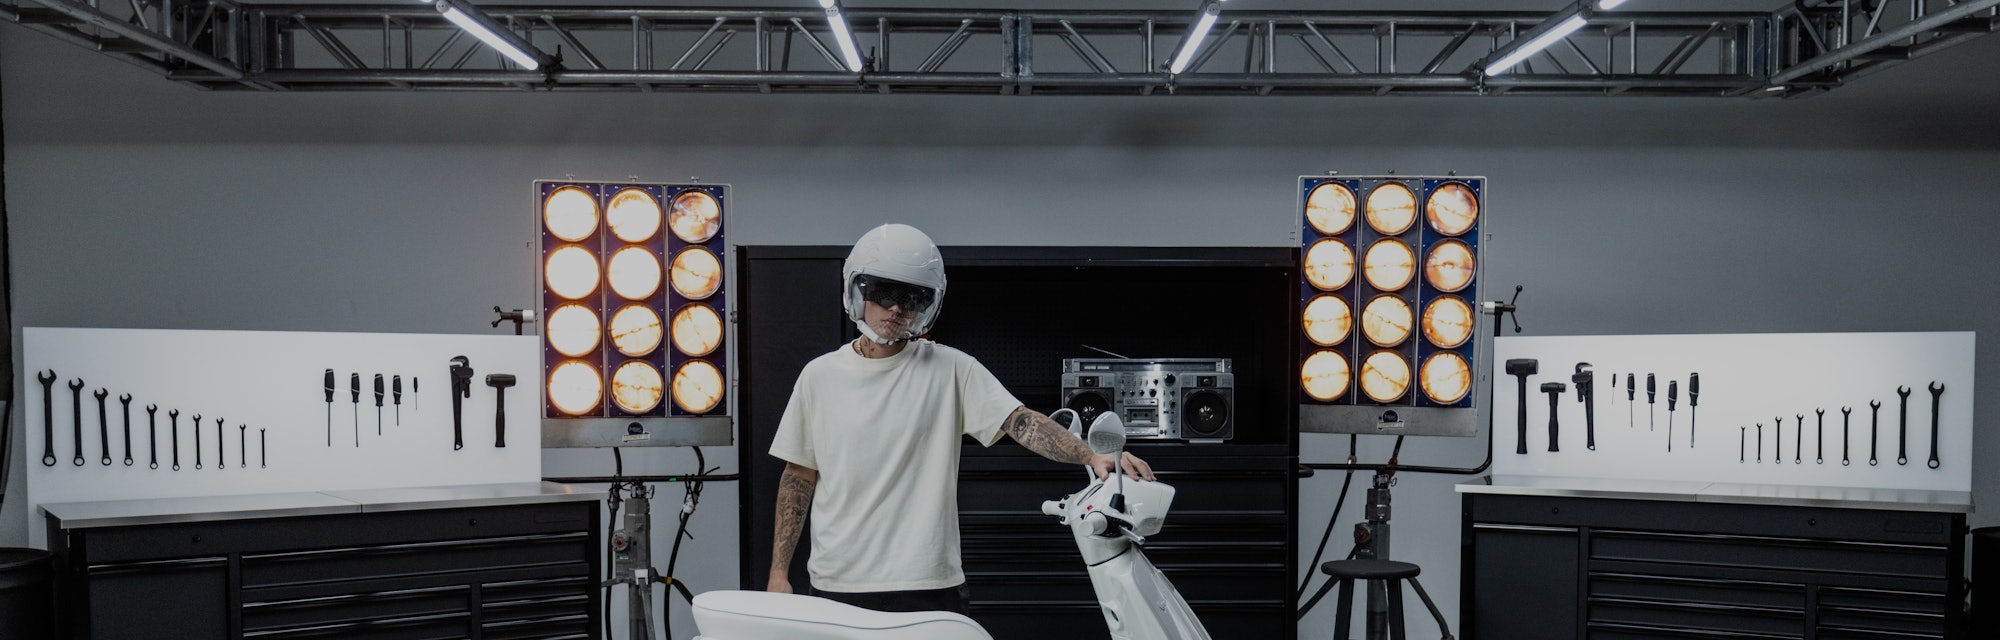 Justin Bieber x Vespa Sprint scooter